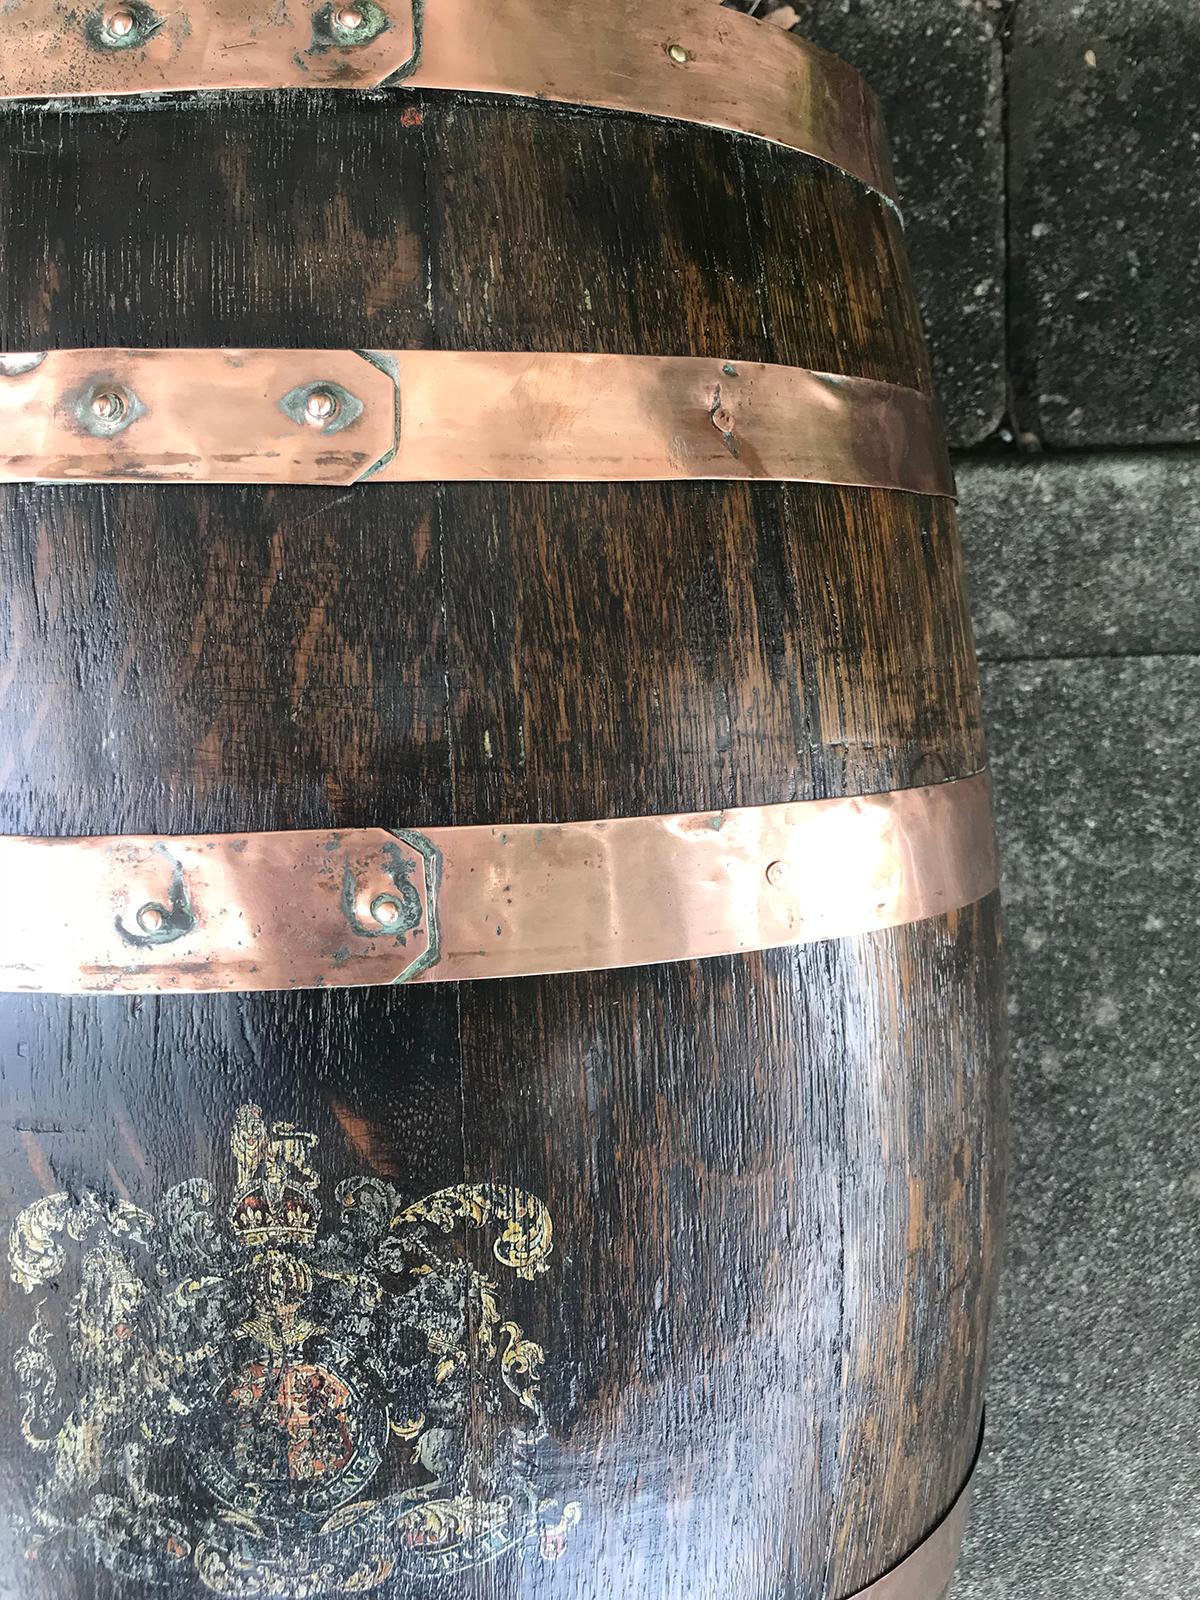 19th century English oak barrel with crest.